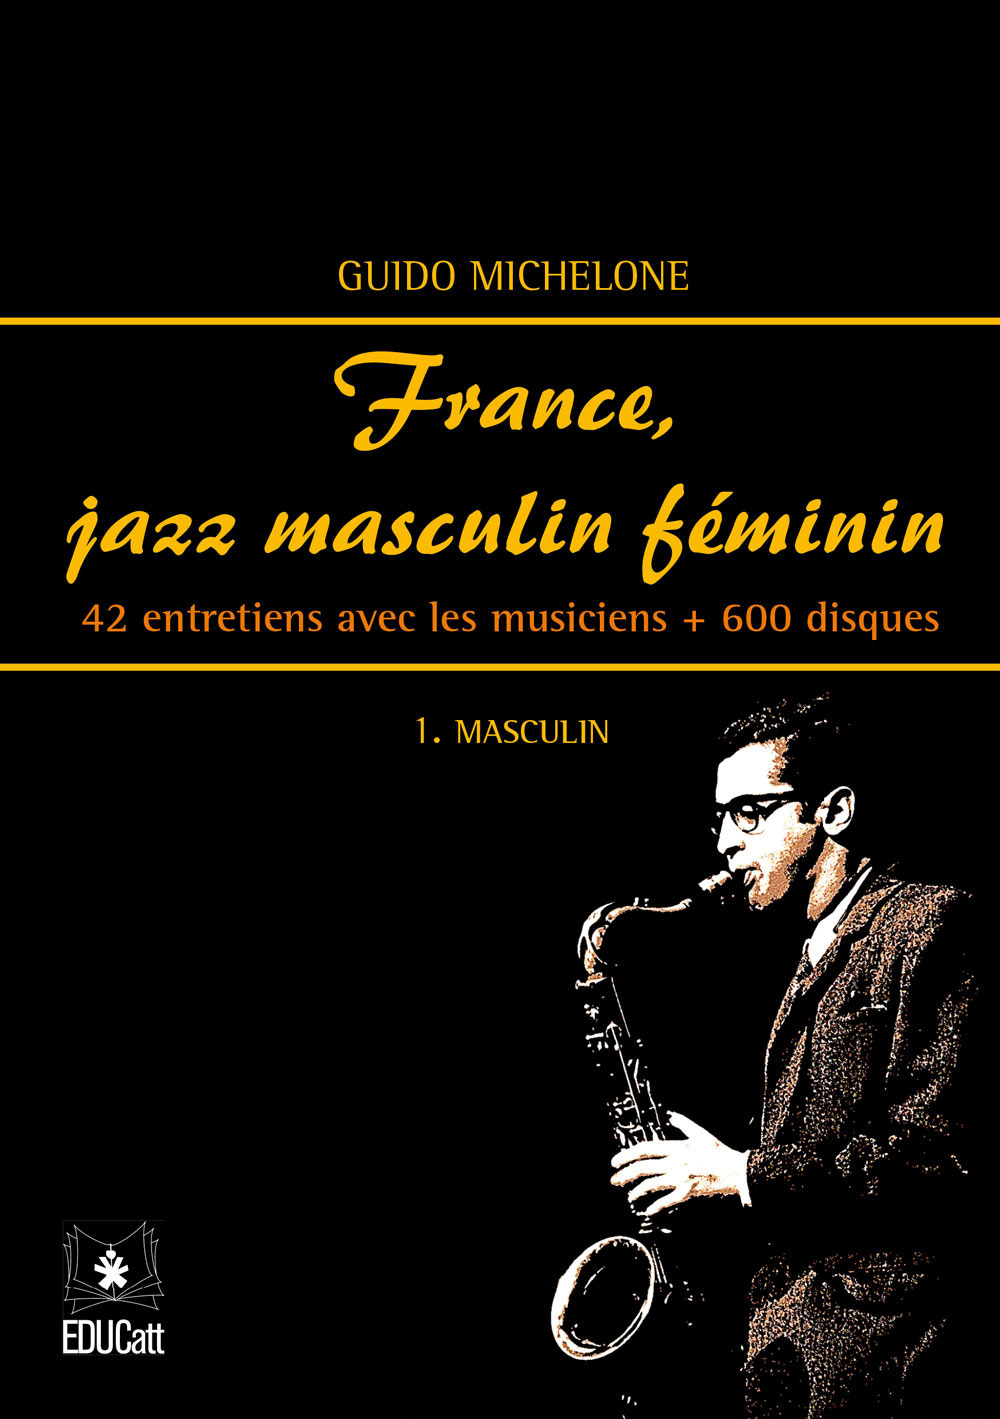 France, jazz masculin féminin. Vol. 1: Masculin. 42 entretiens avec les musiciens + 600 disques